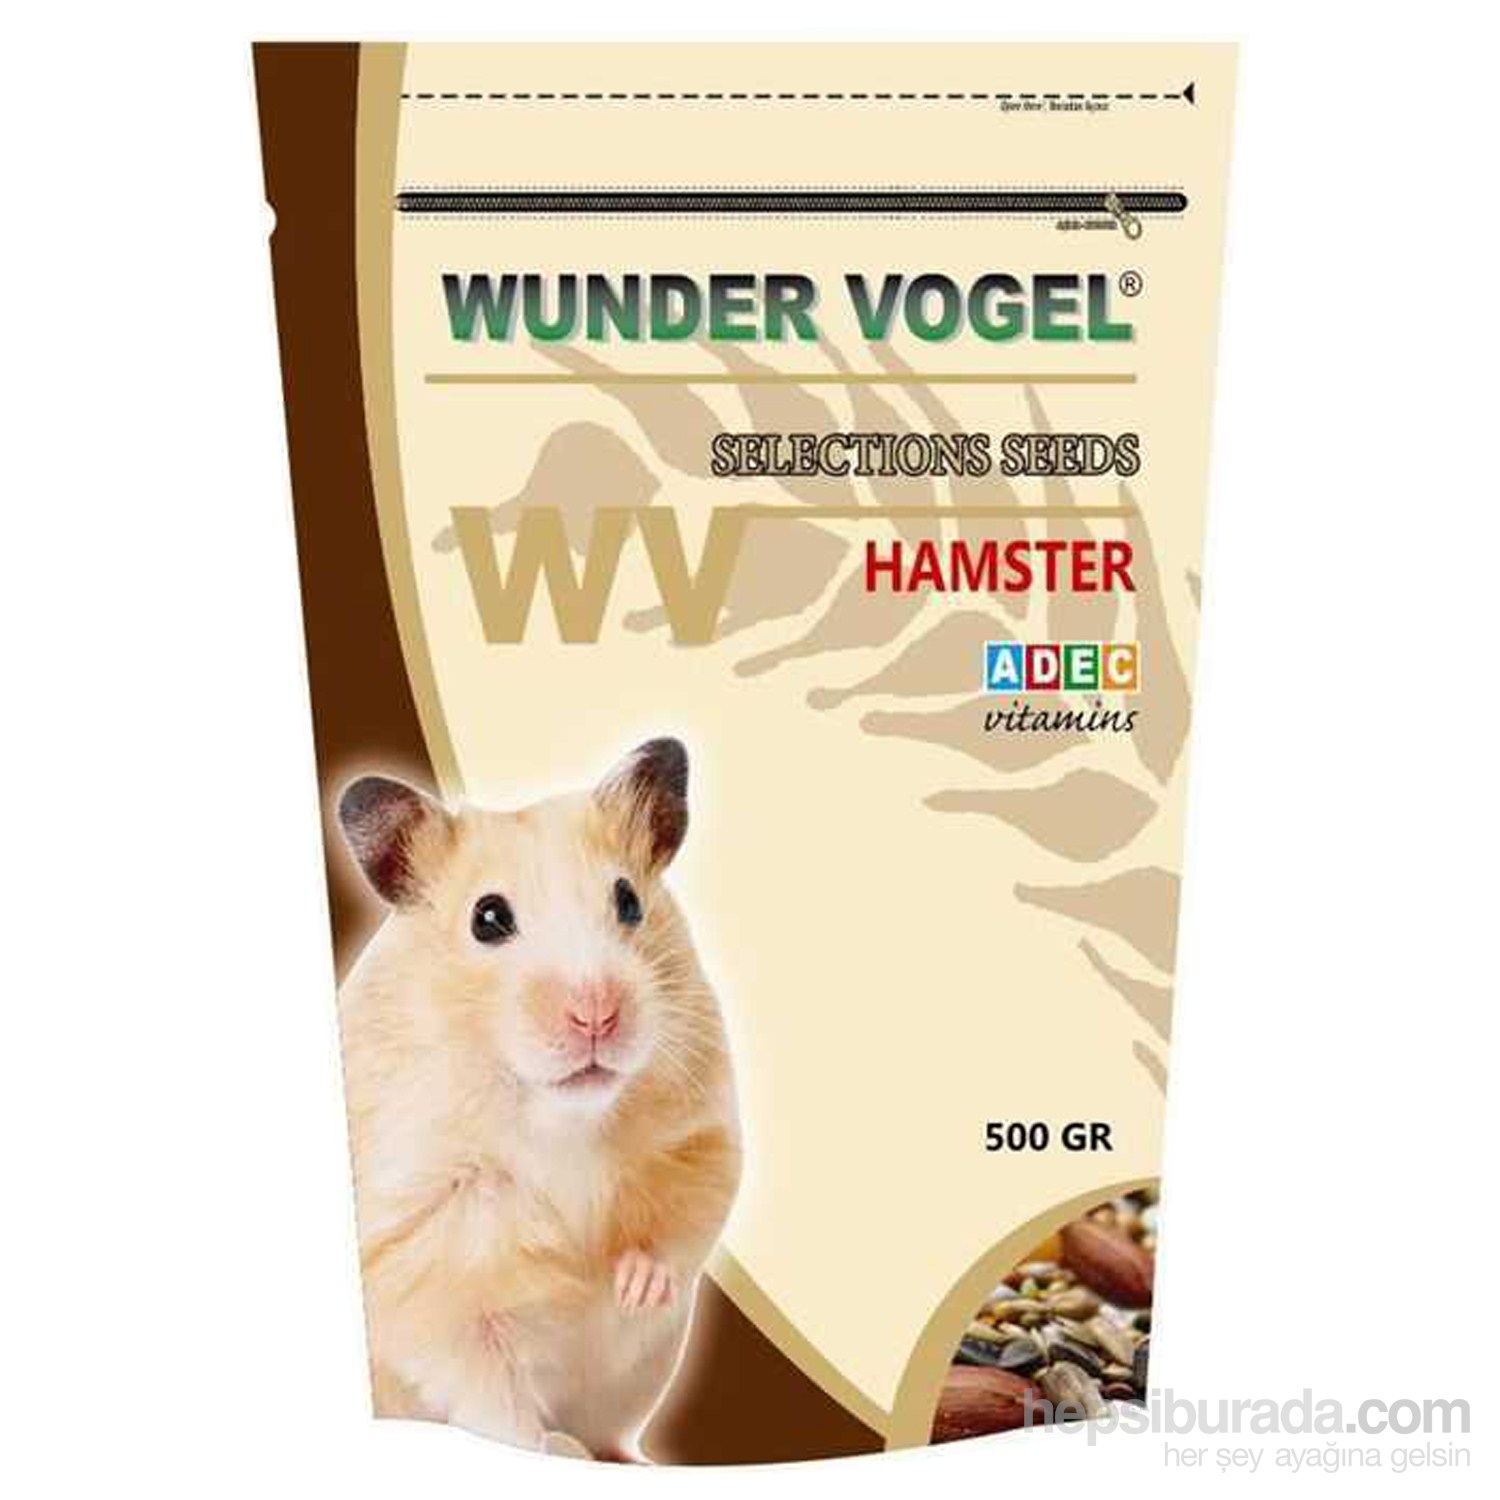 Wunder Vogel Selections Seed Hamster Yemi 500 Gr.